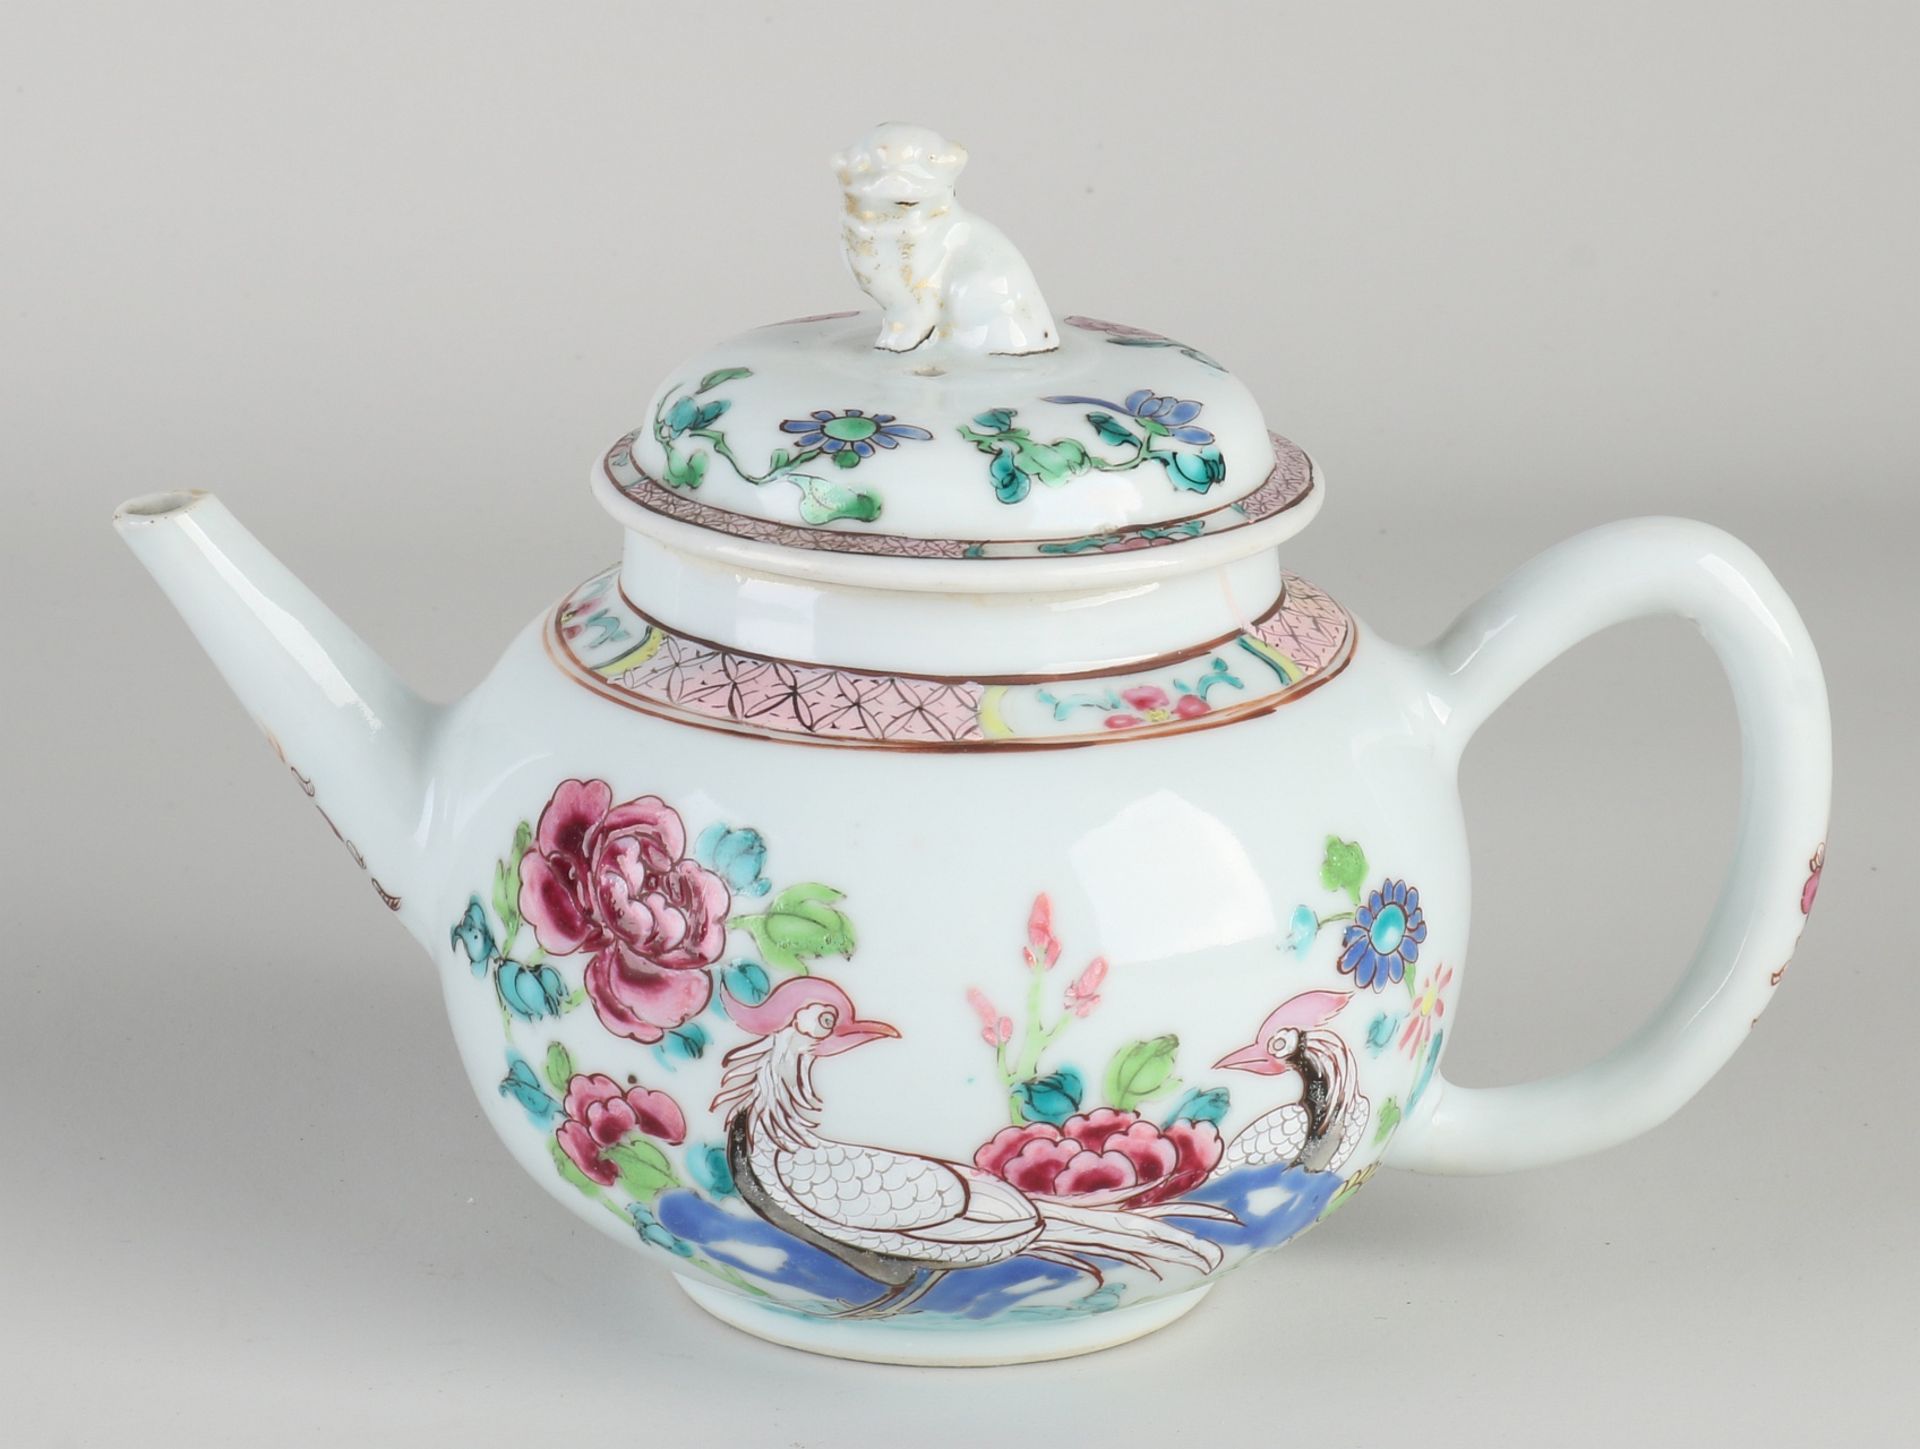 Family Rose teapot, 18th century